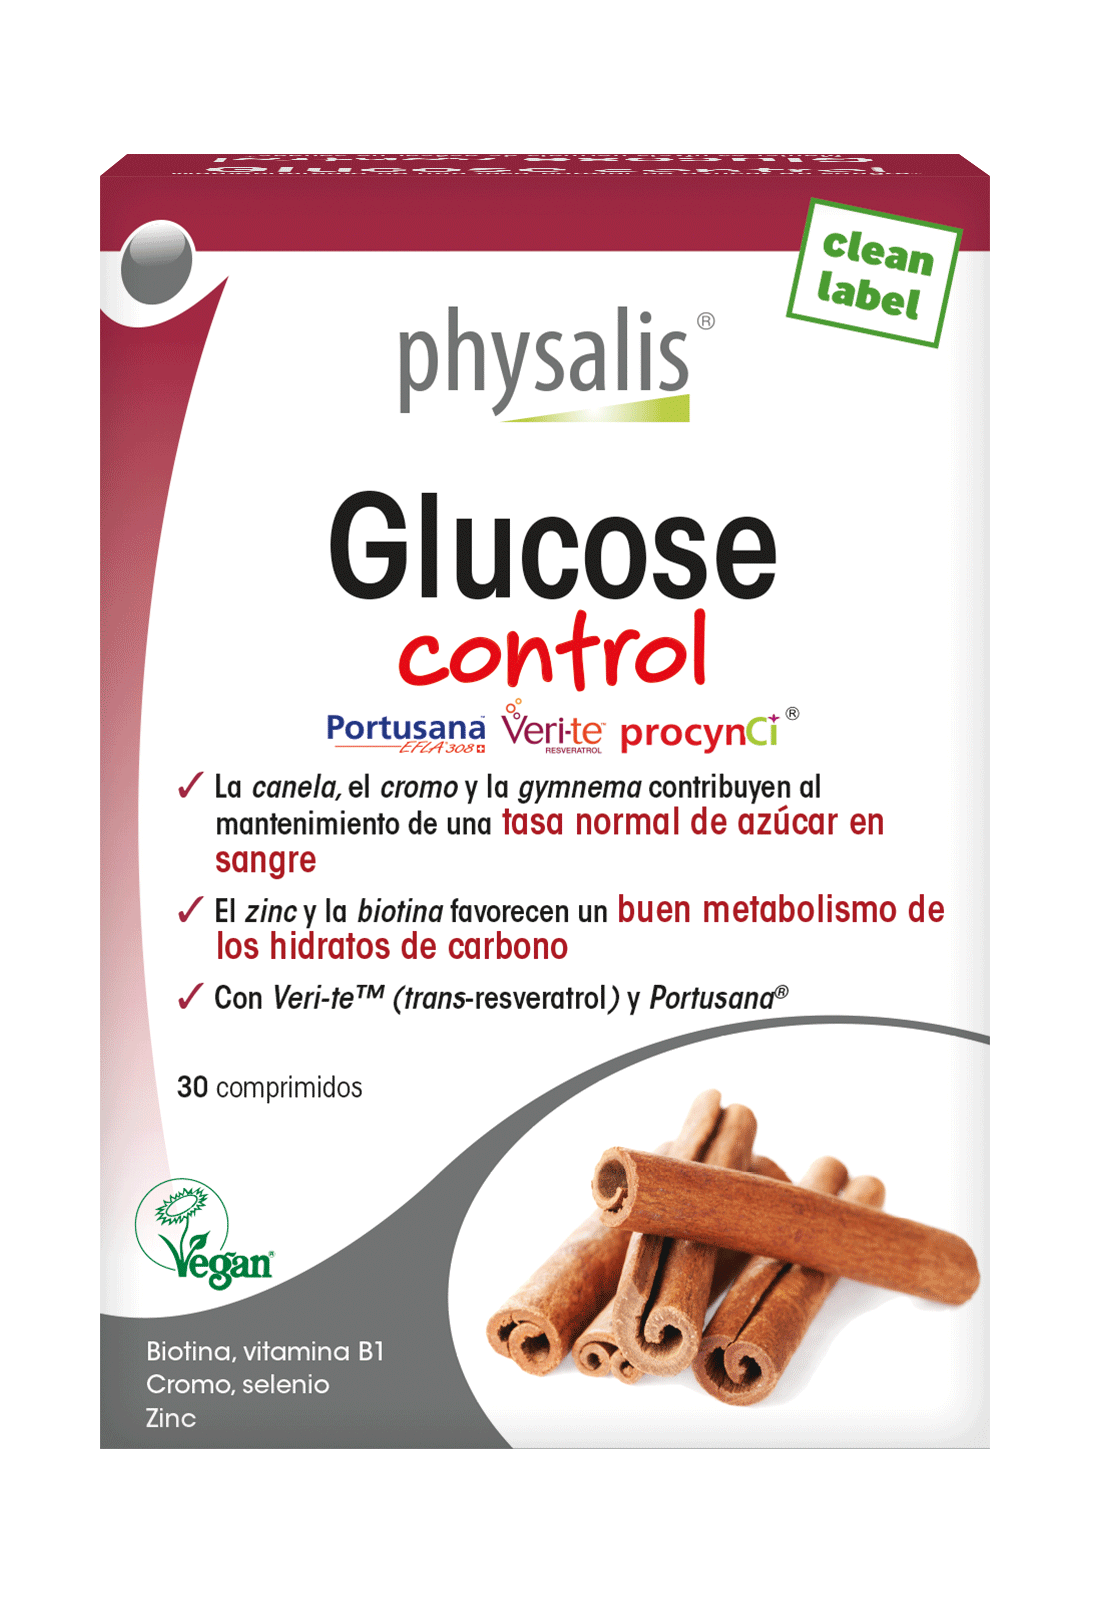 Glucose control